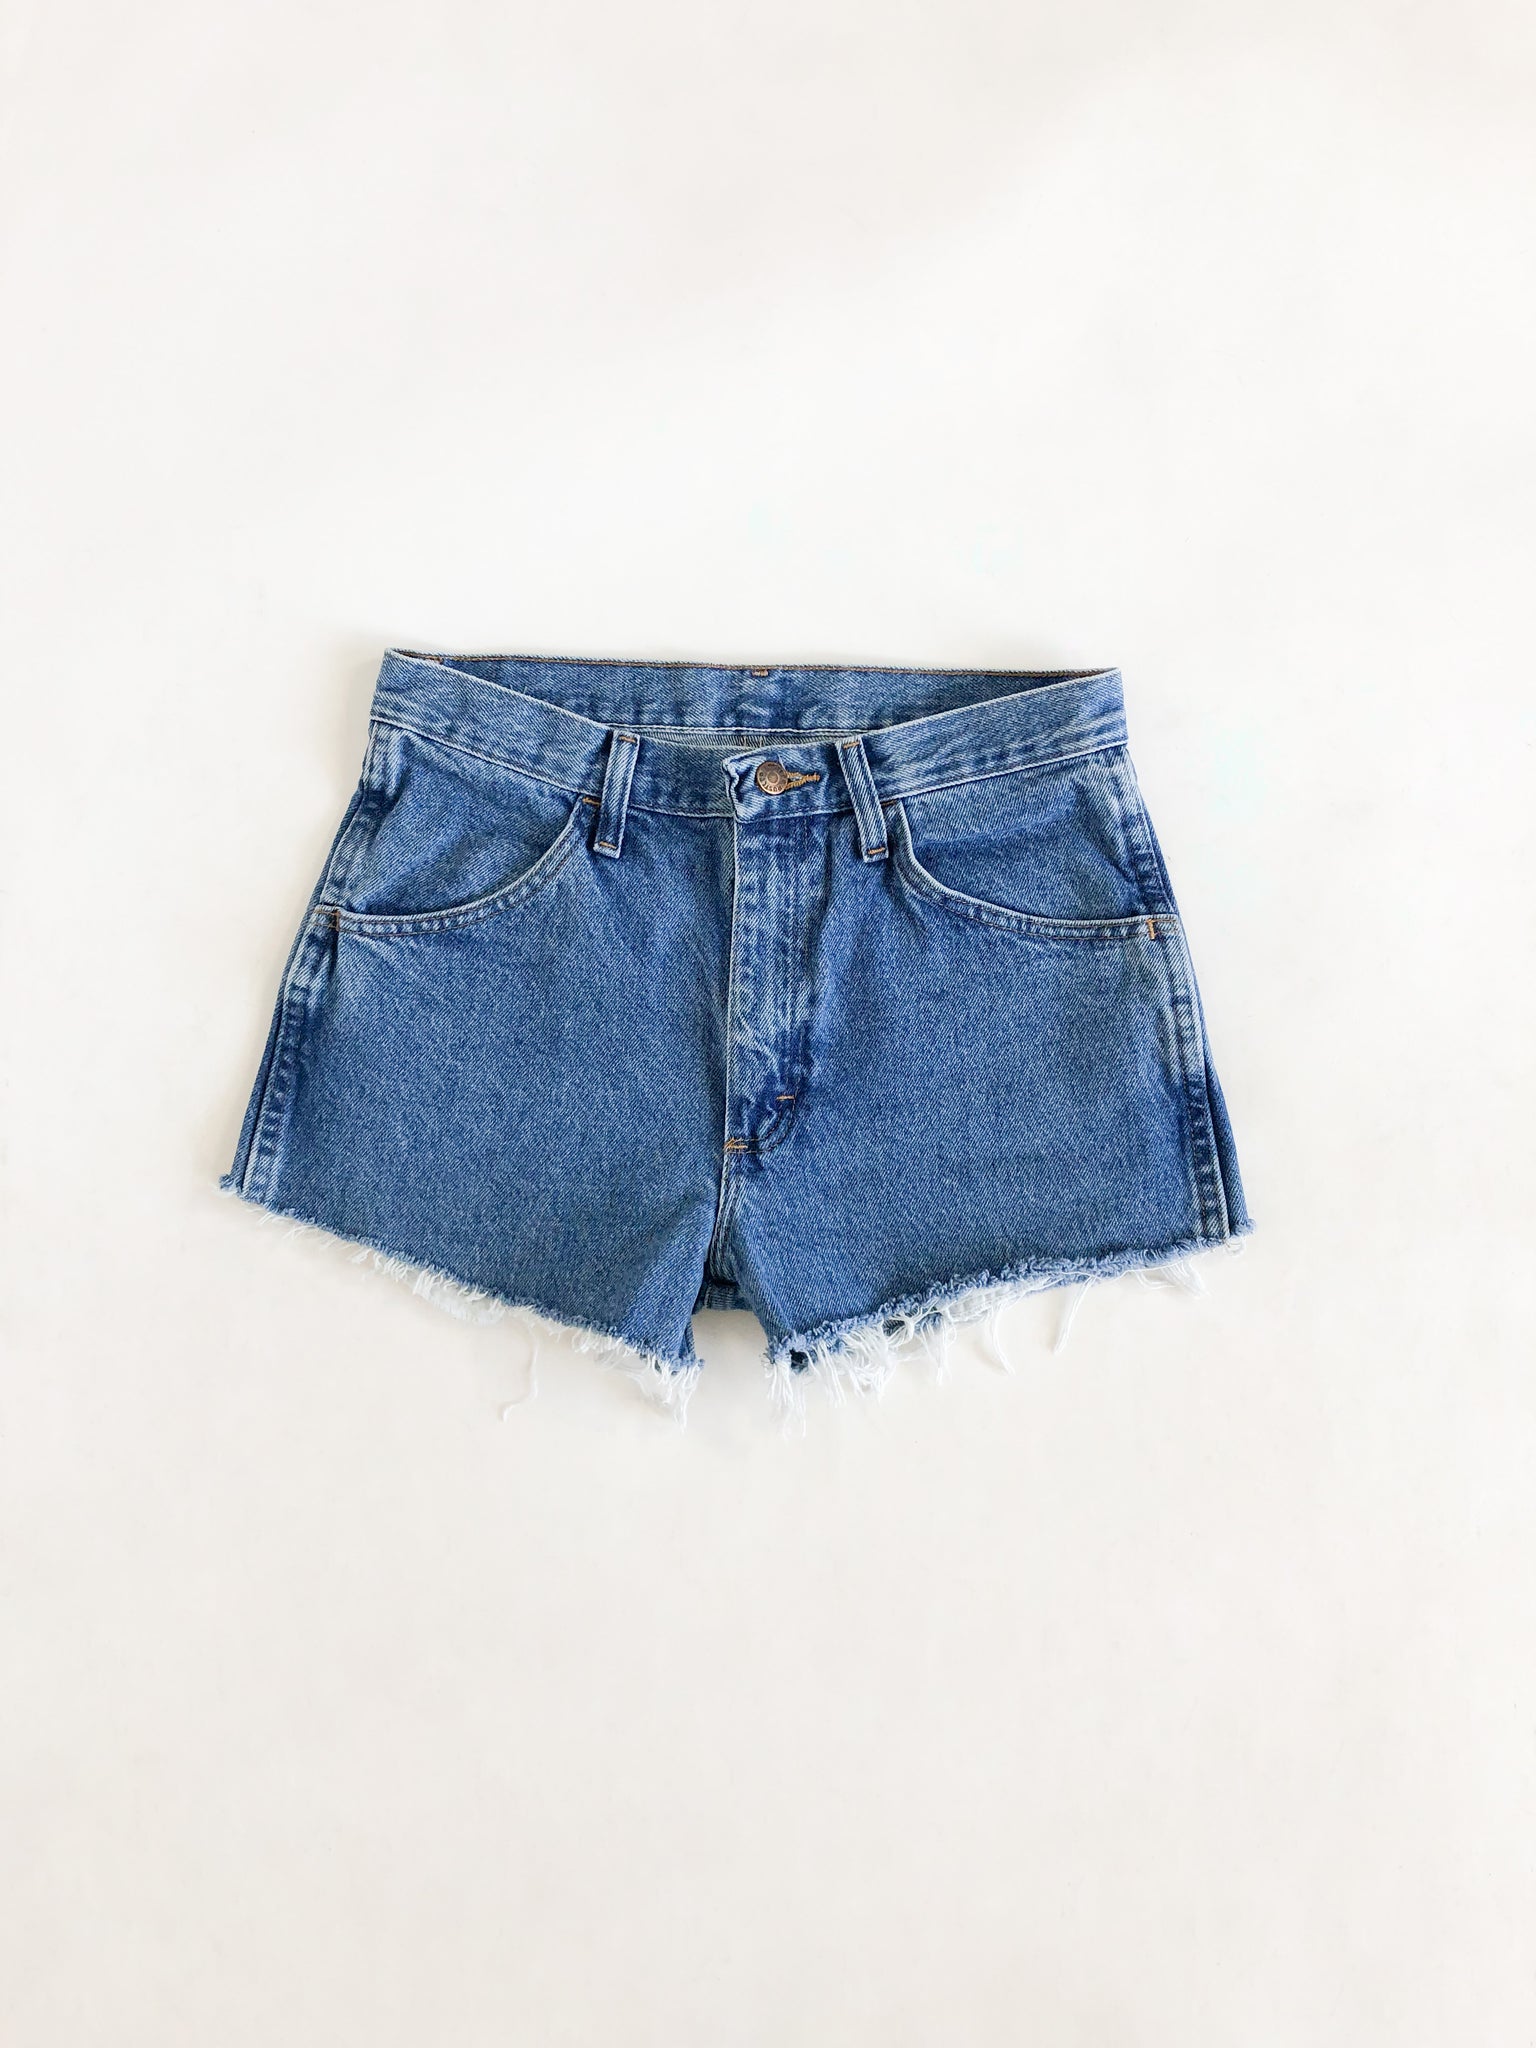 Vintage Jean Shorts 90s Sonoma Light Denim Size 8, 31 Mid Rise Waist -   Canada